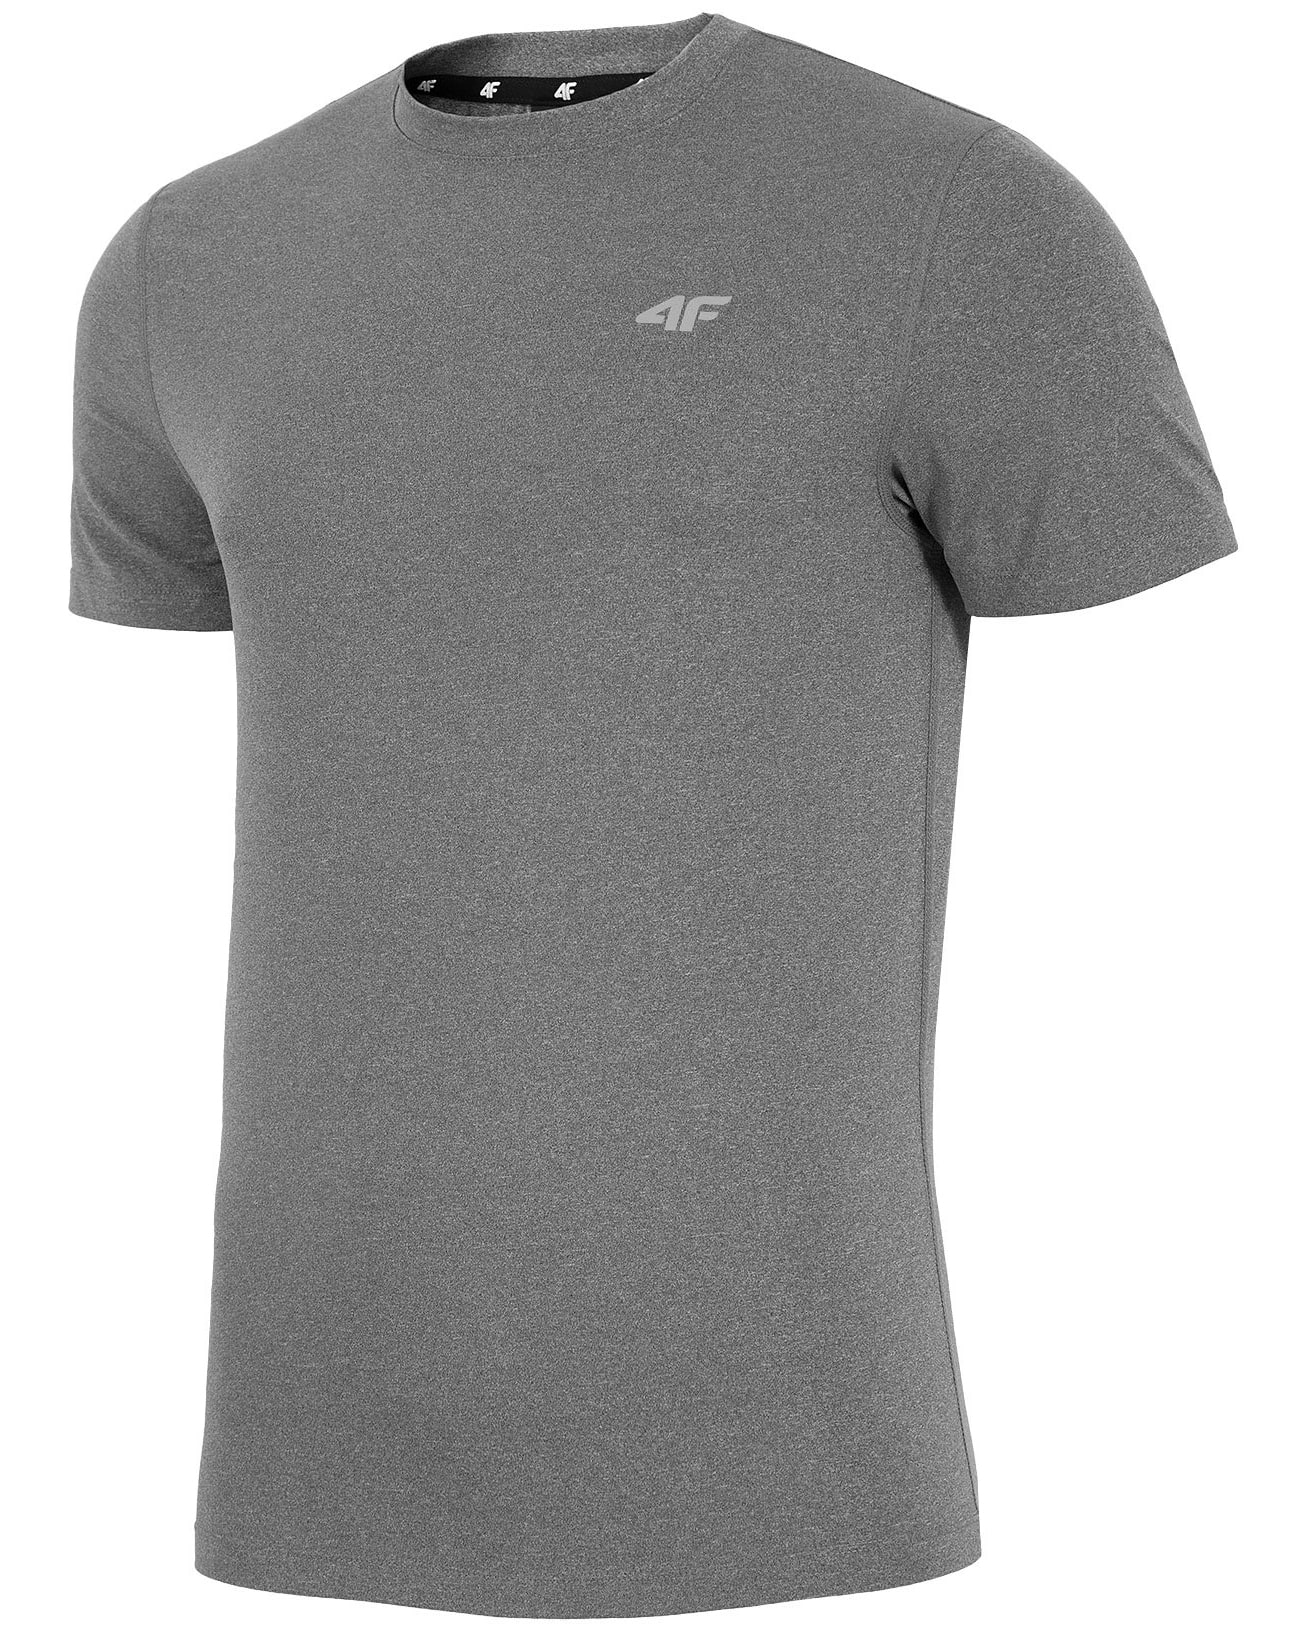 4F Man’s Functional T-shirt - Light Grey Melange